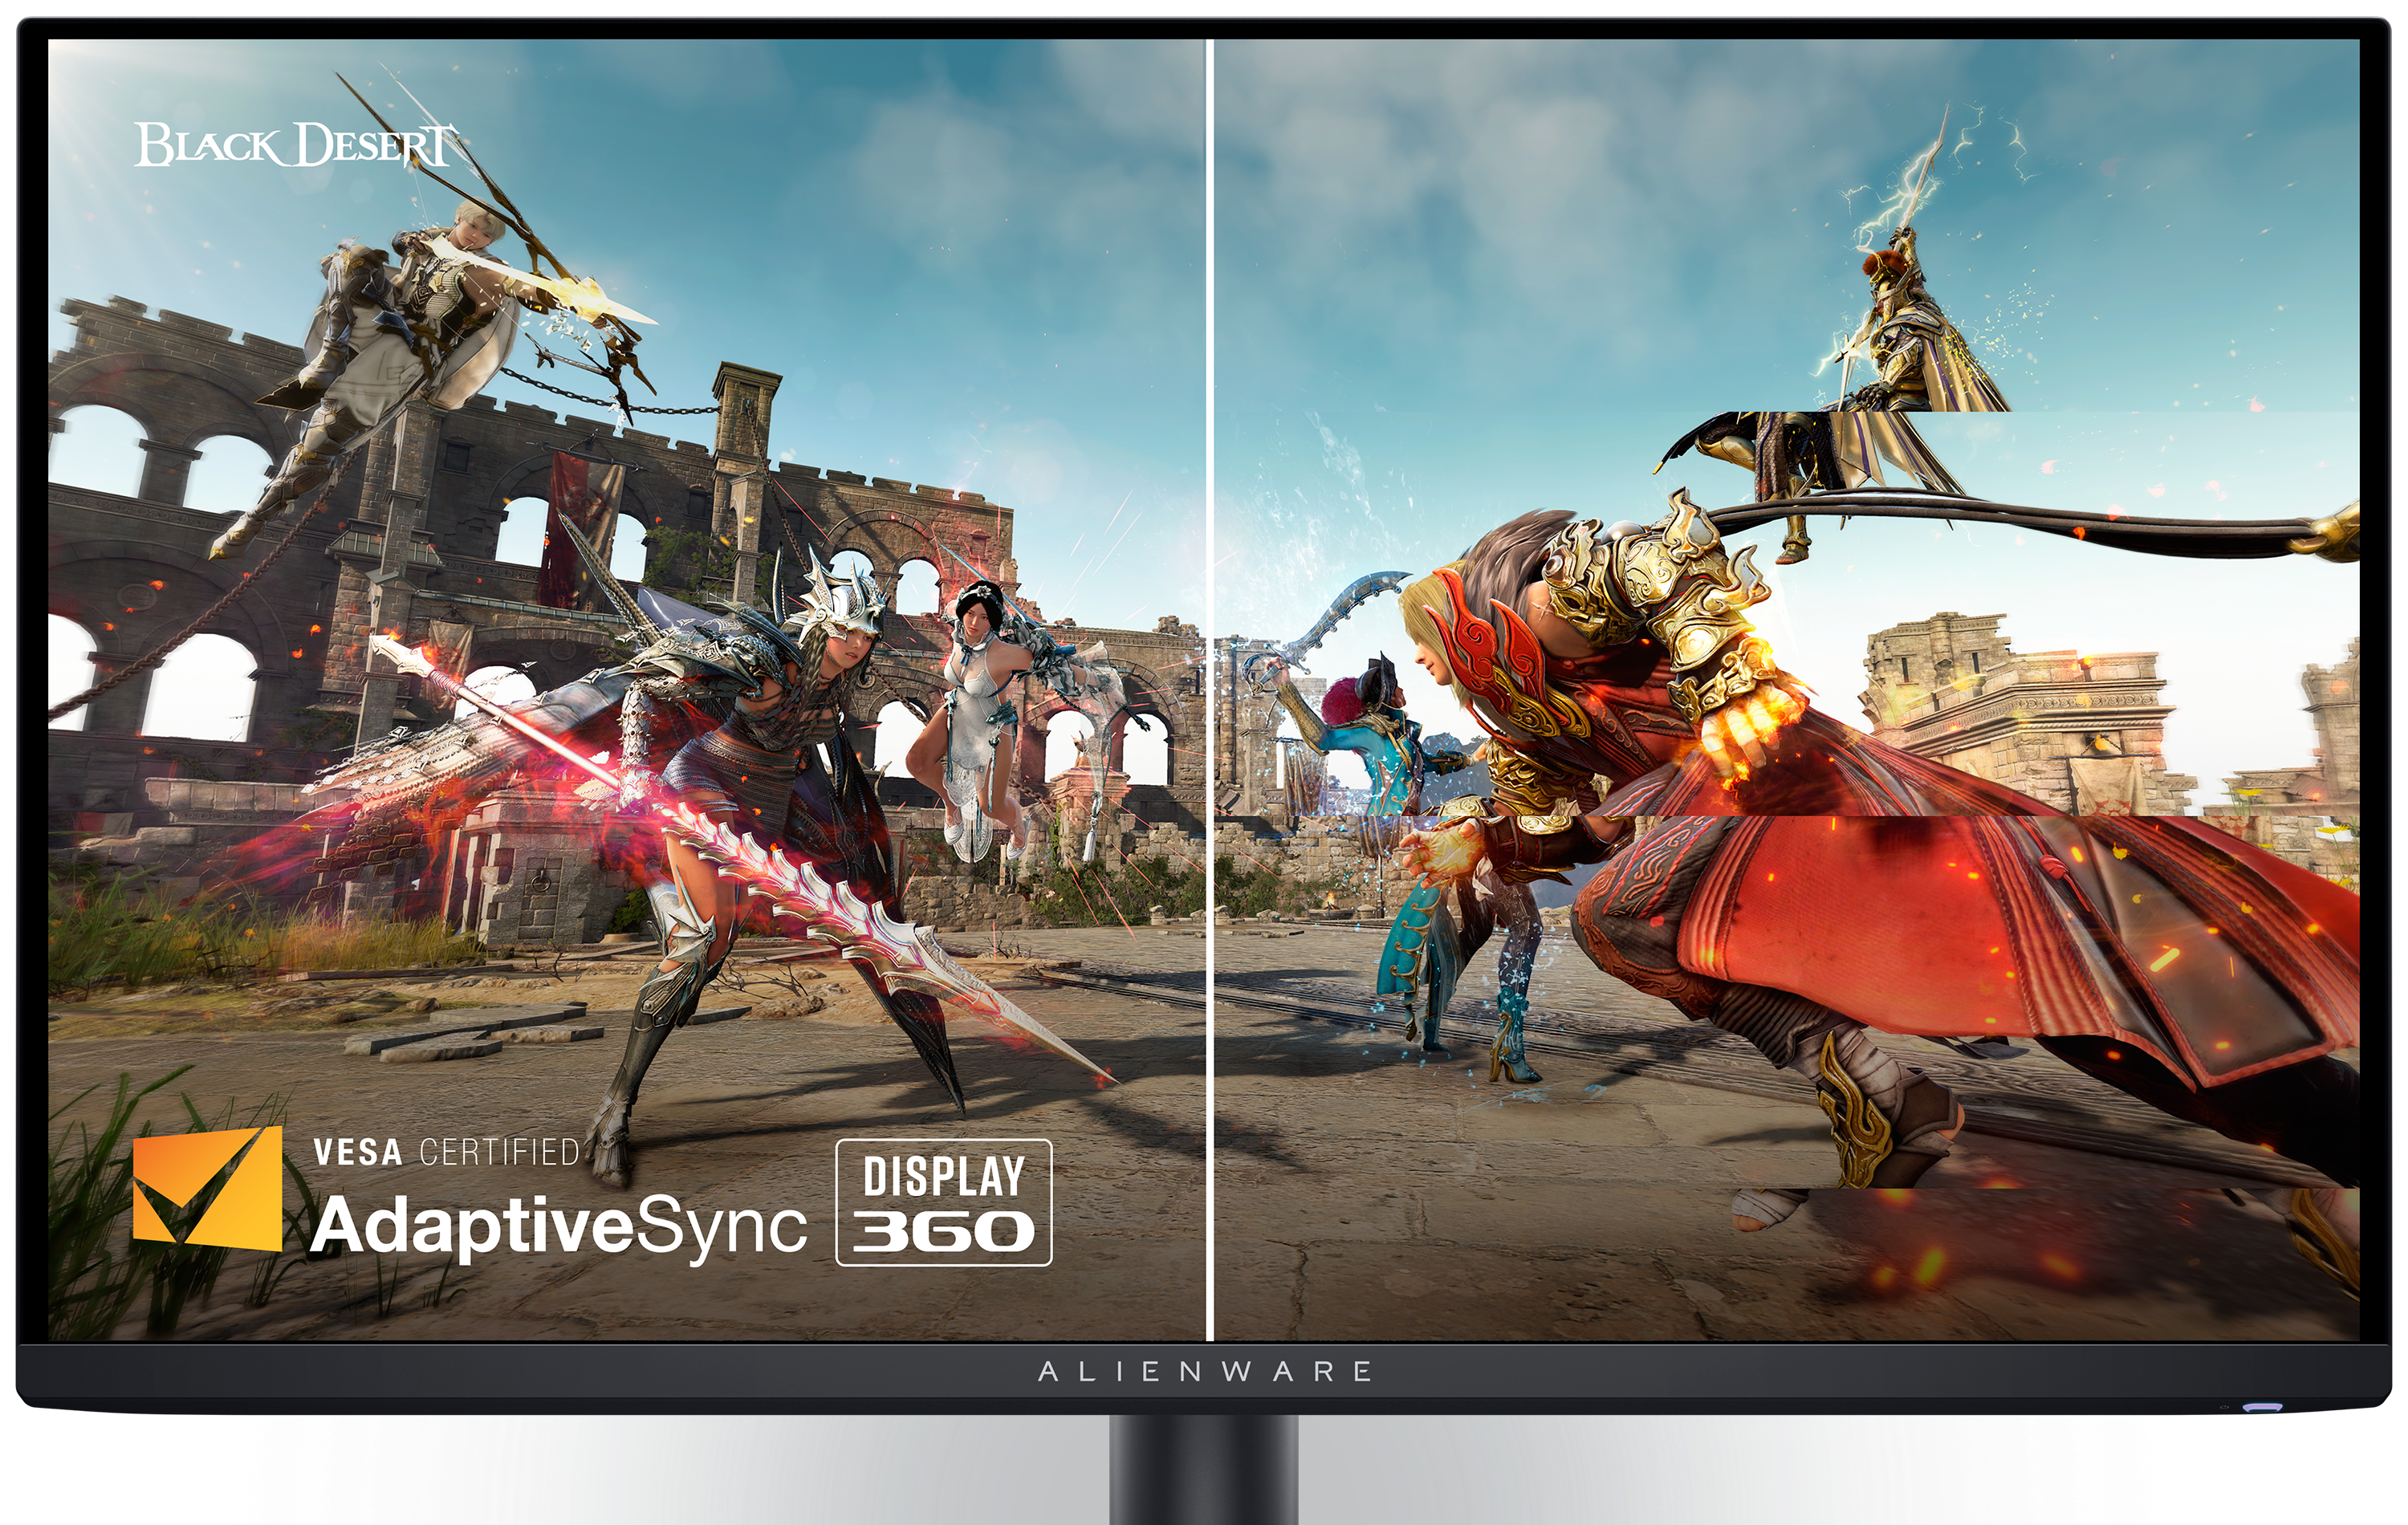 Dell AW2725DF-gamingskærm med et spilbillede fra spillet Black Desert og et Vesa-certificeret AdaptiveSync-logo på skærmen.